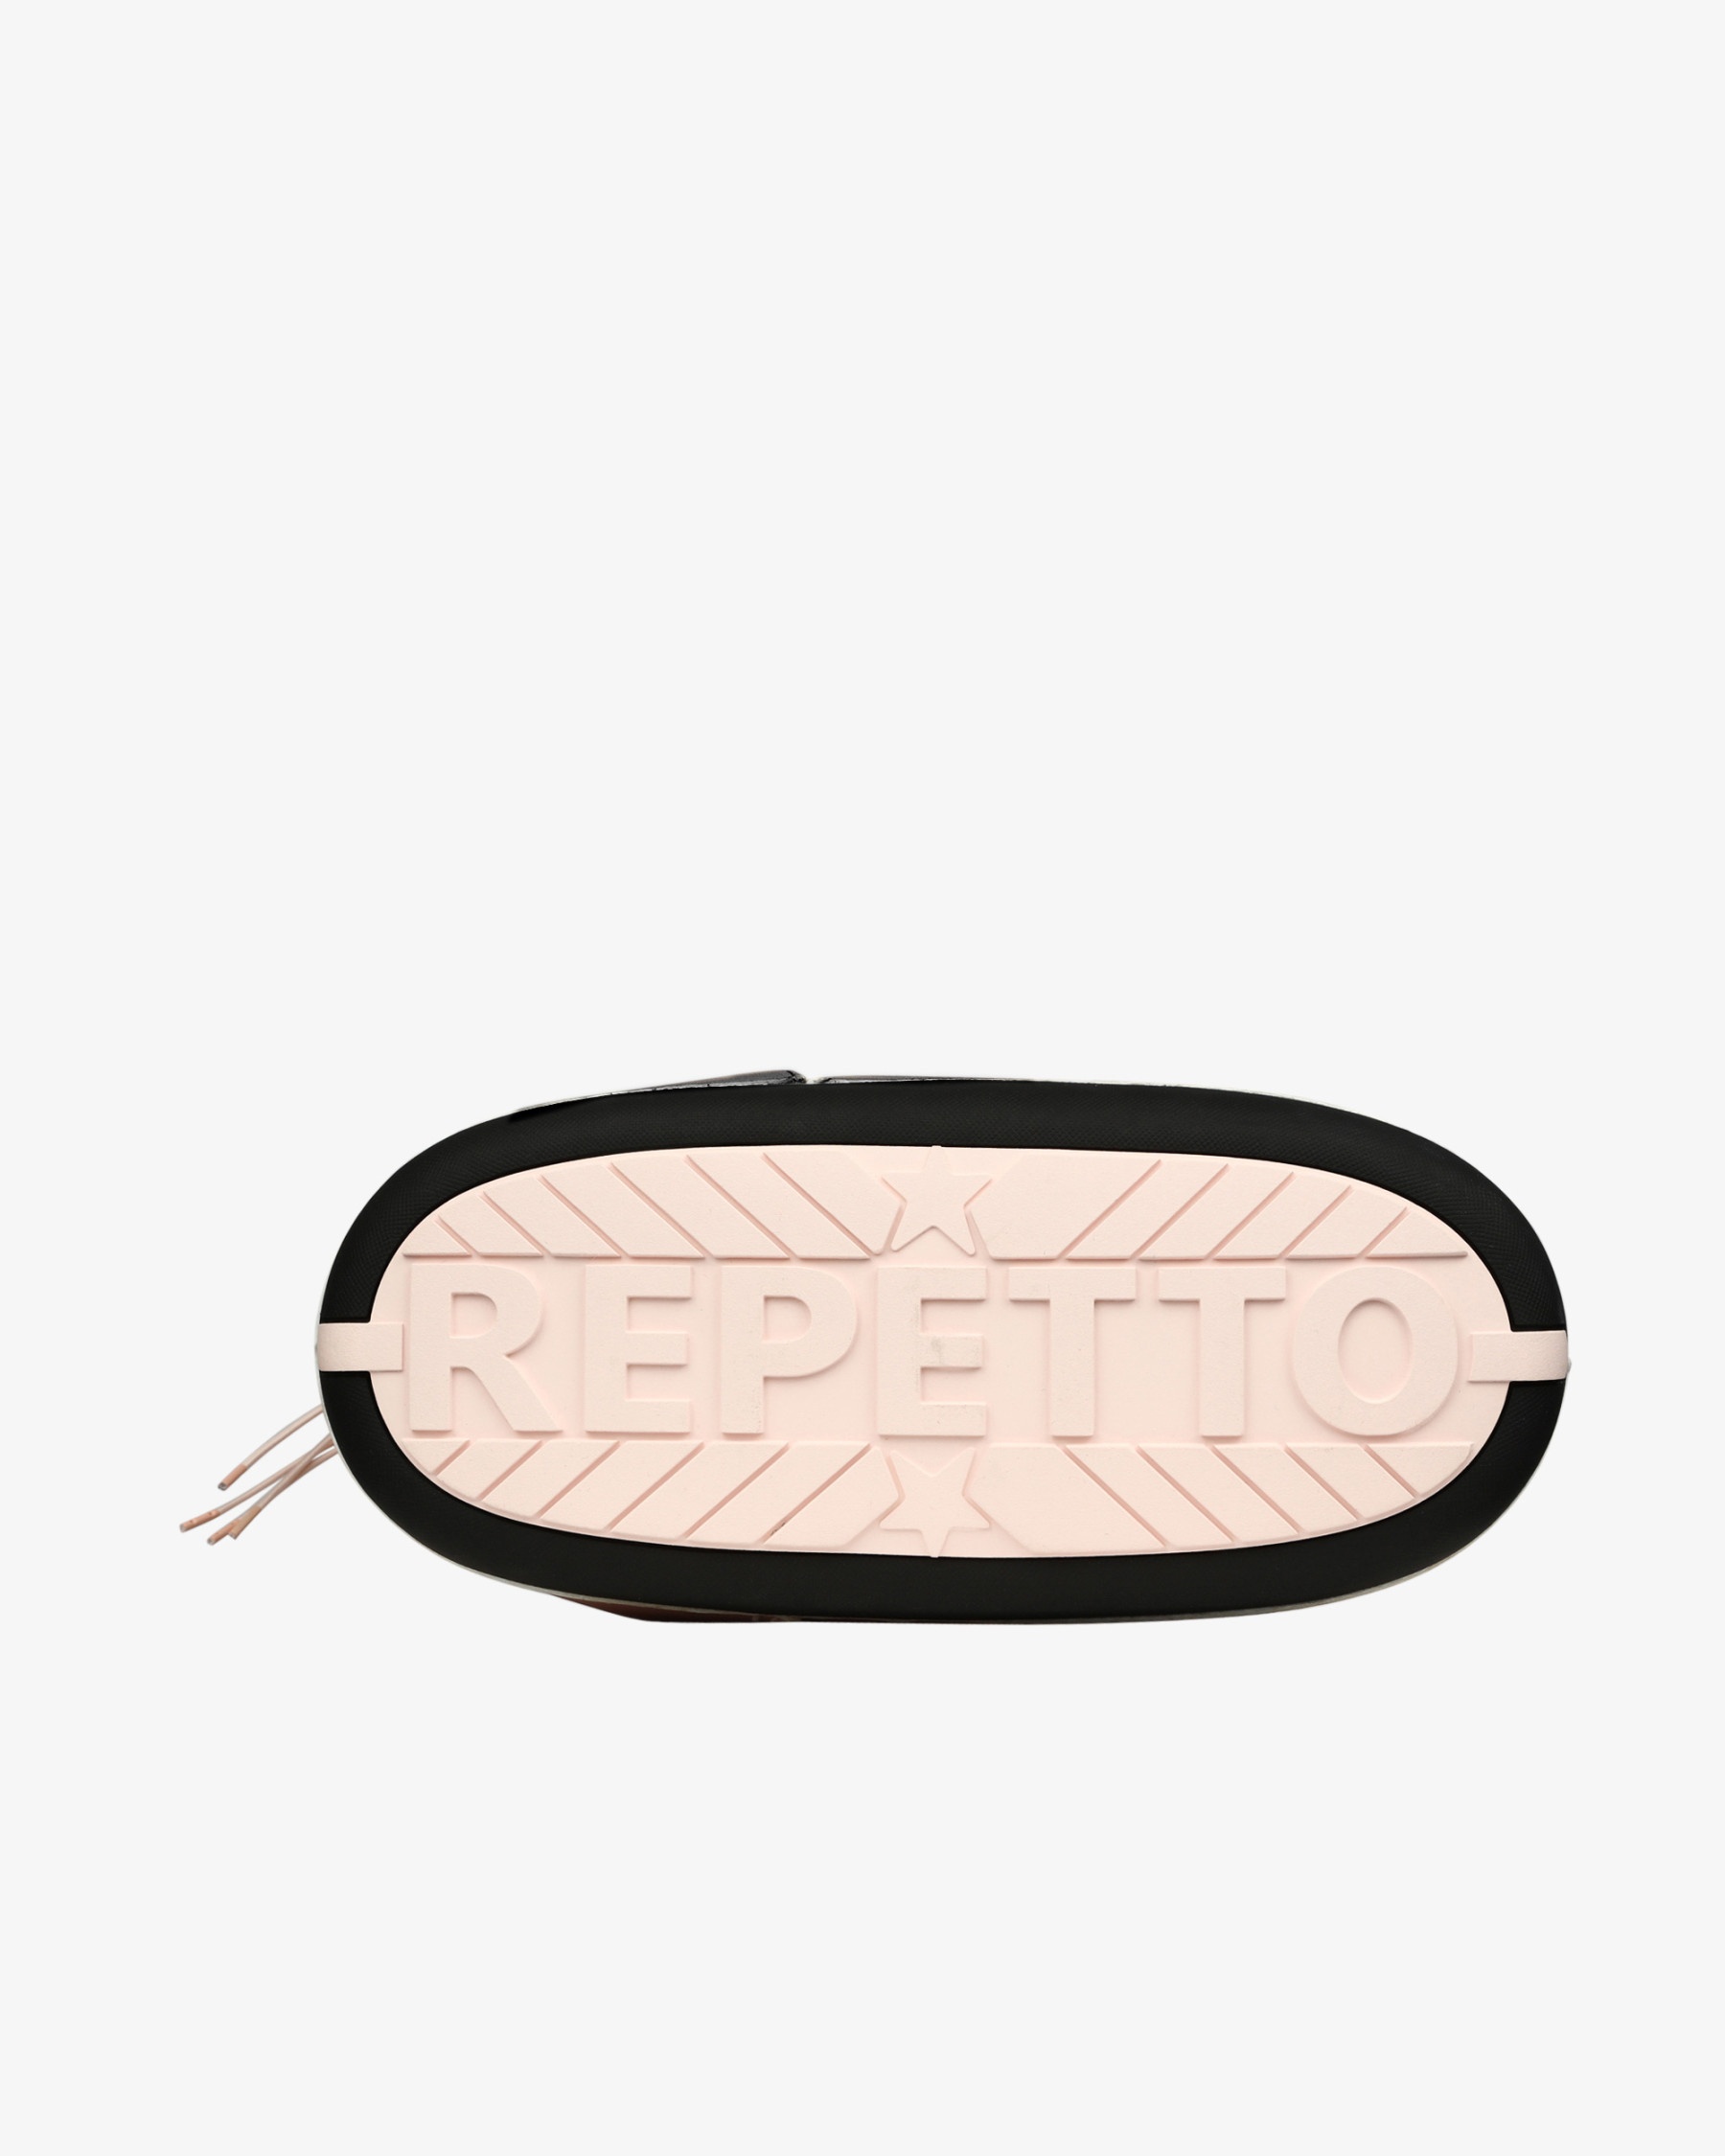 Repetto Gentiane boots | REVERSIBLE